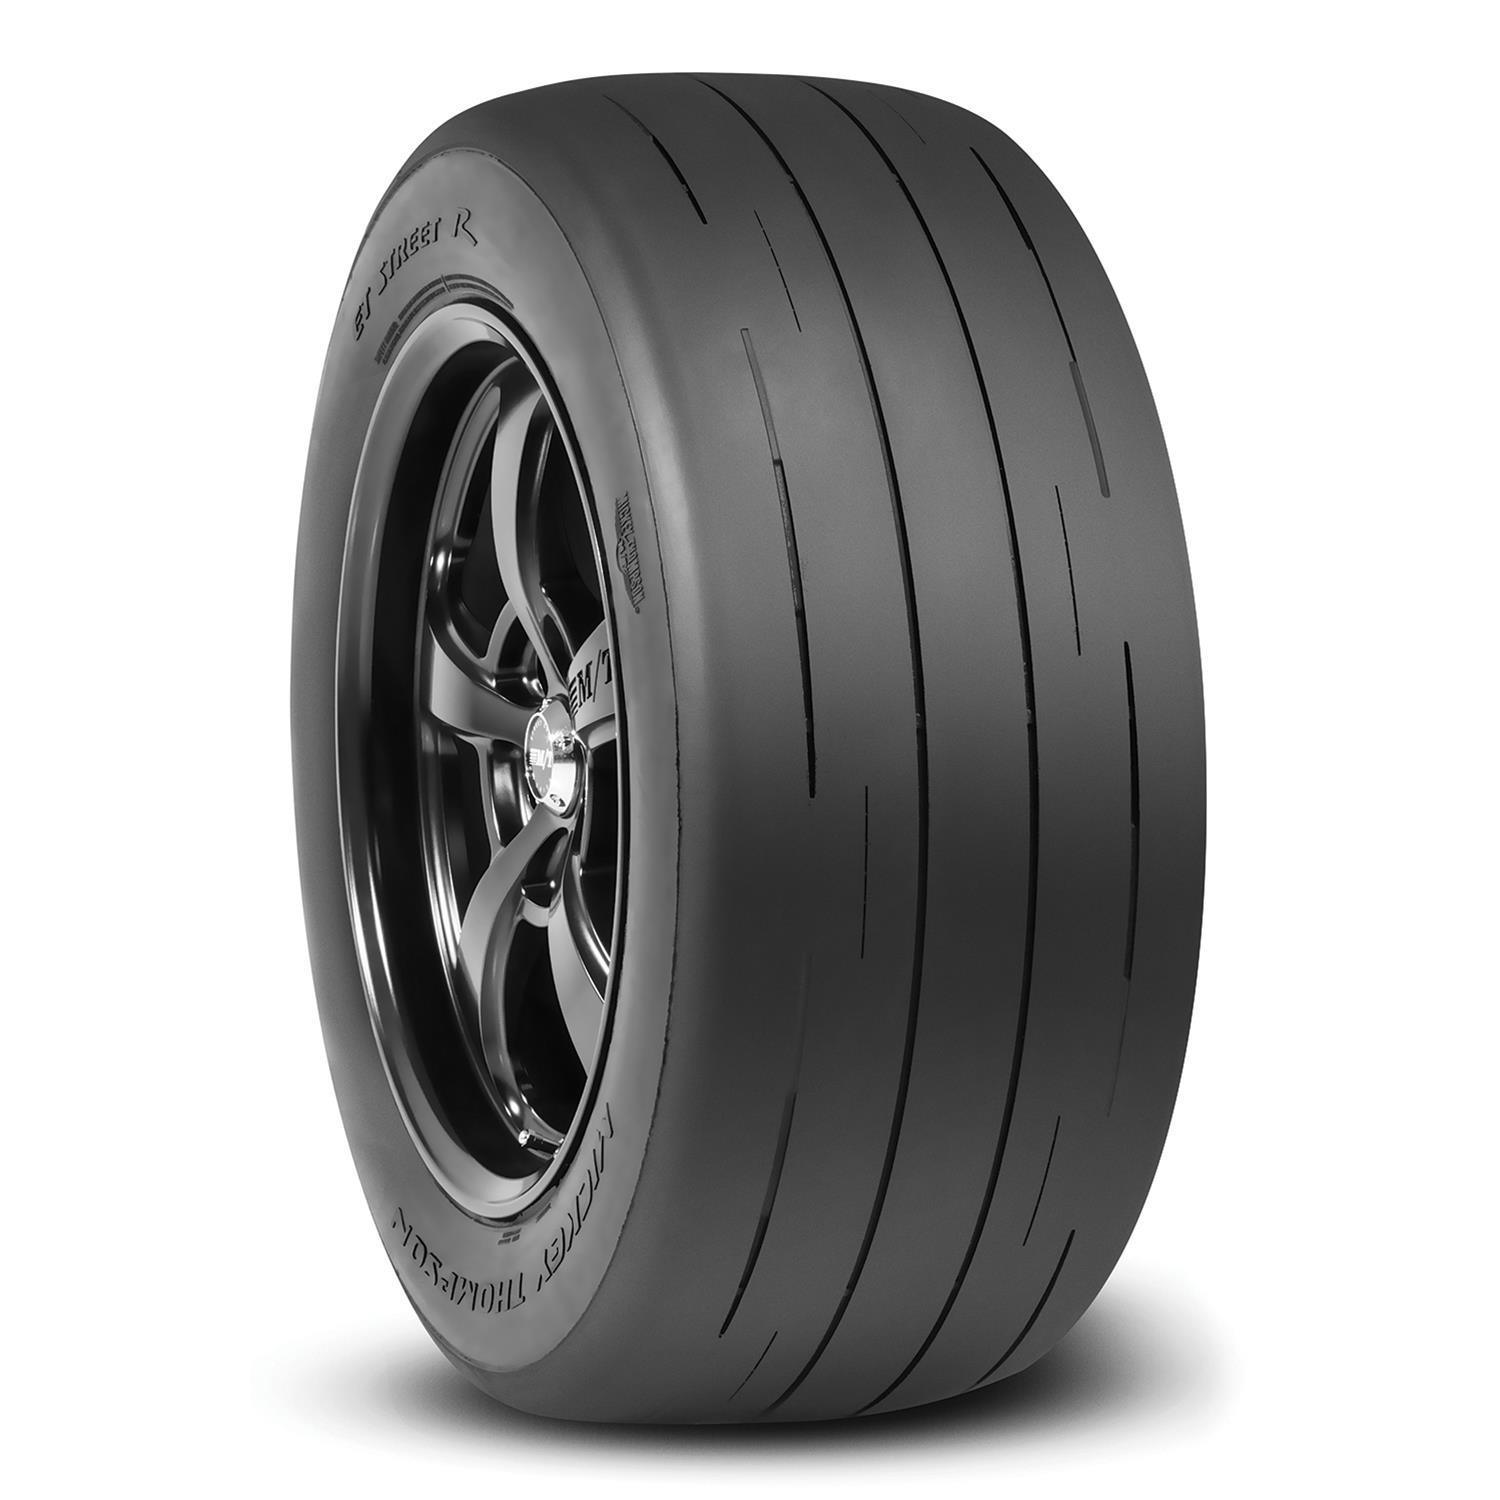 P295/65R15 ET Street R Tire - Burlile Performance Products